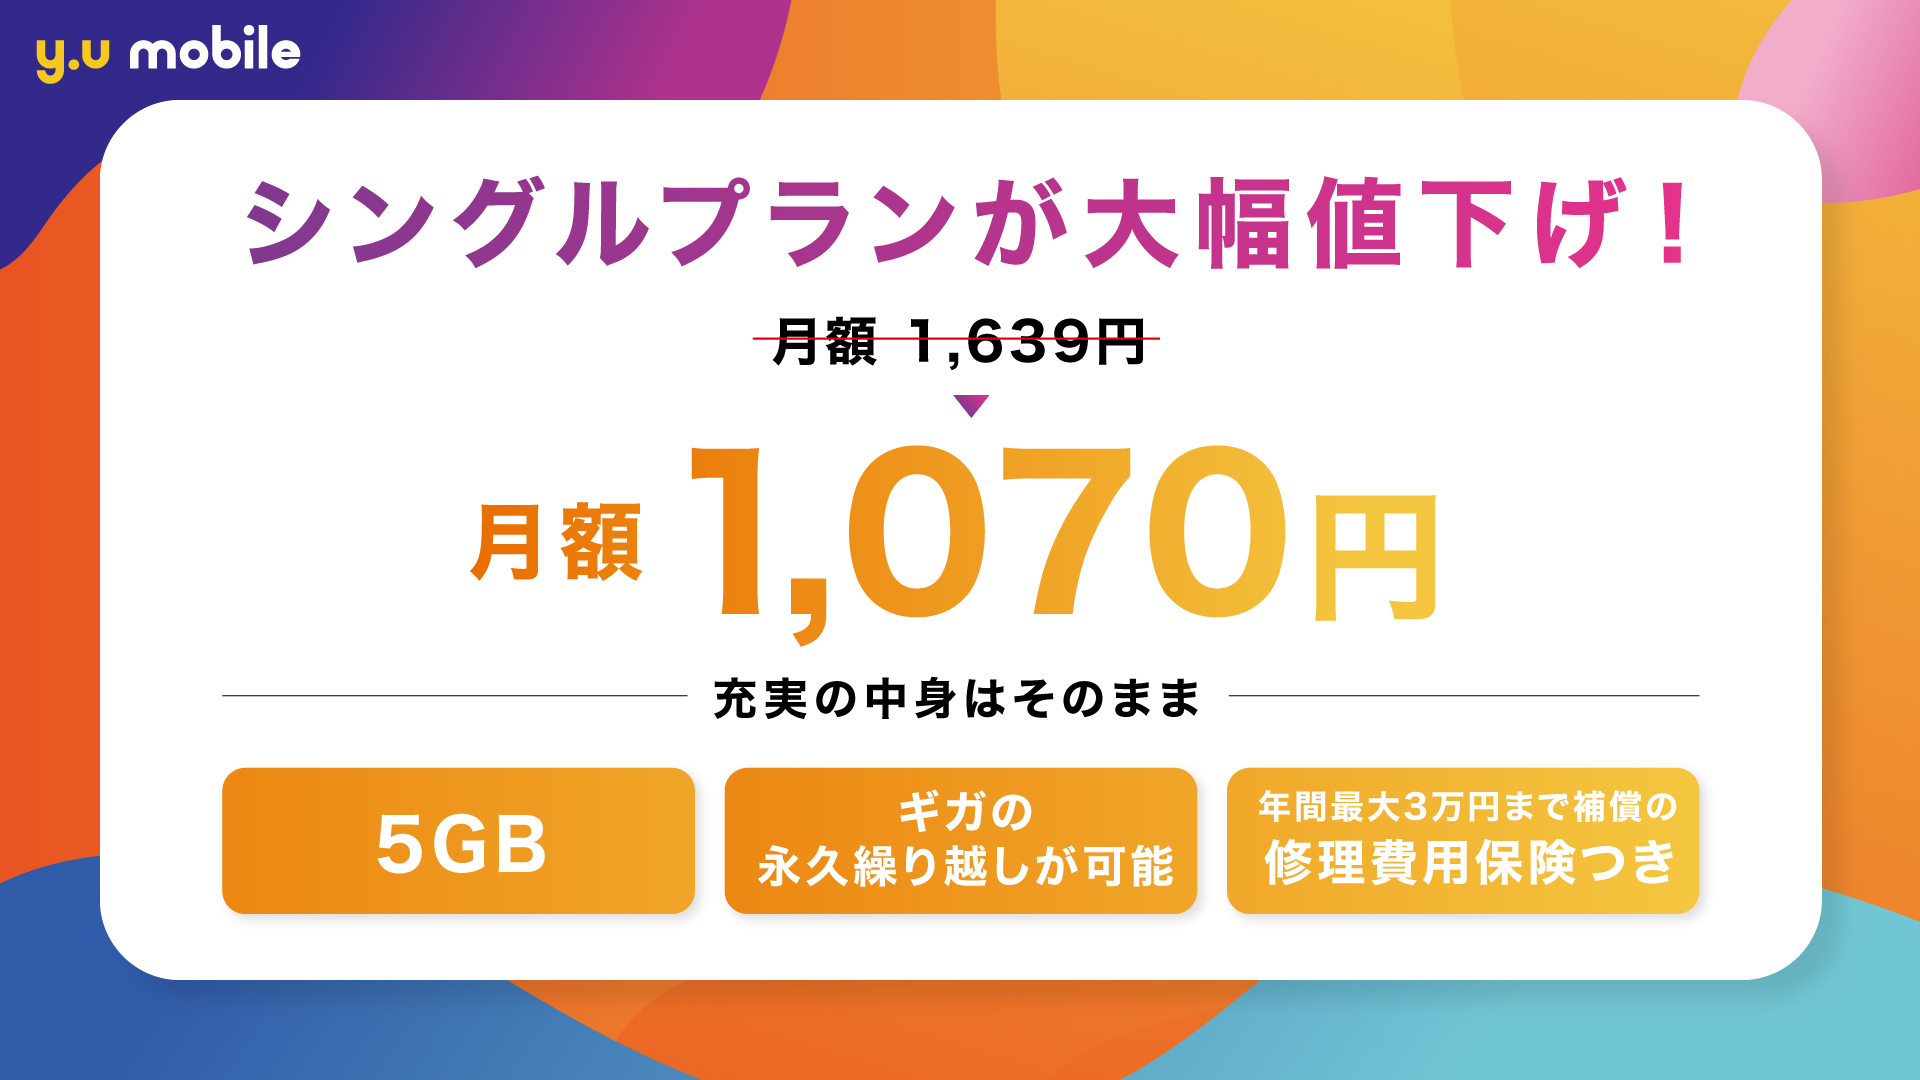 y.u mobile』 シングルプランを月額1,070円に値下げ｜Y.U-mobile ...